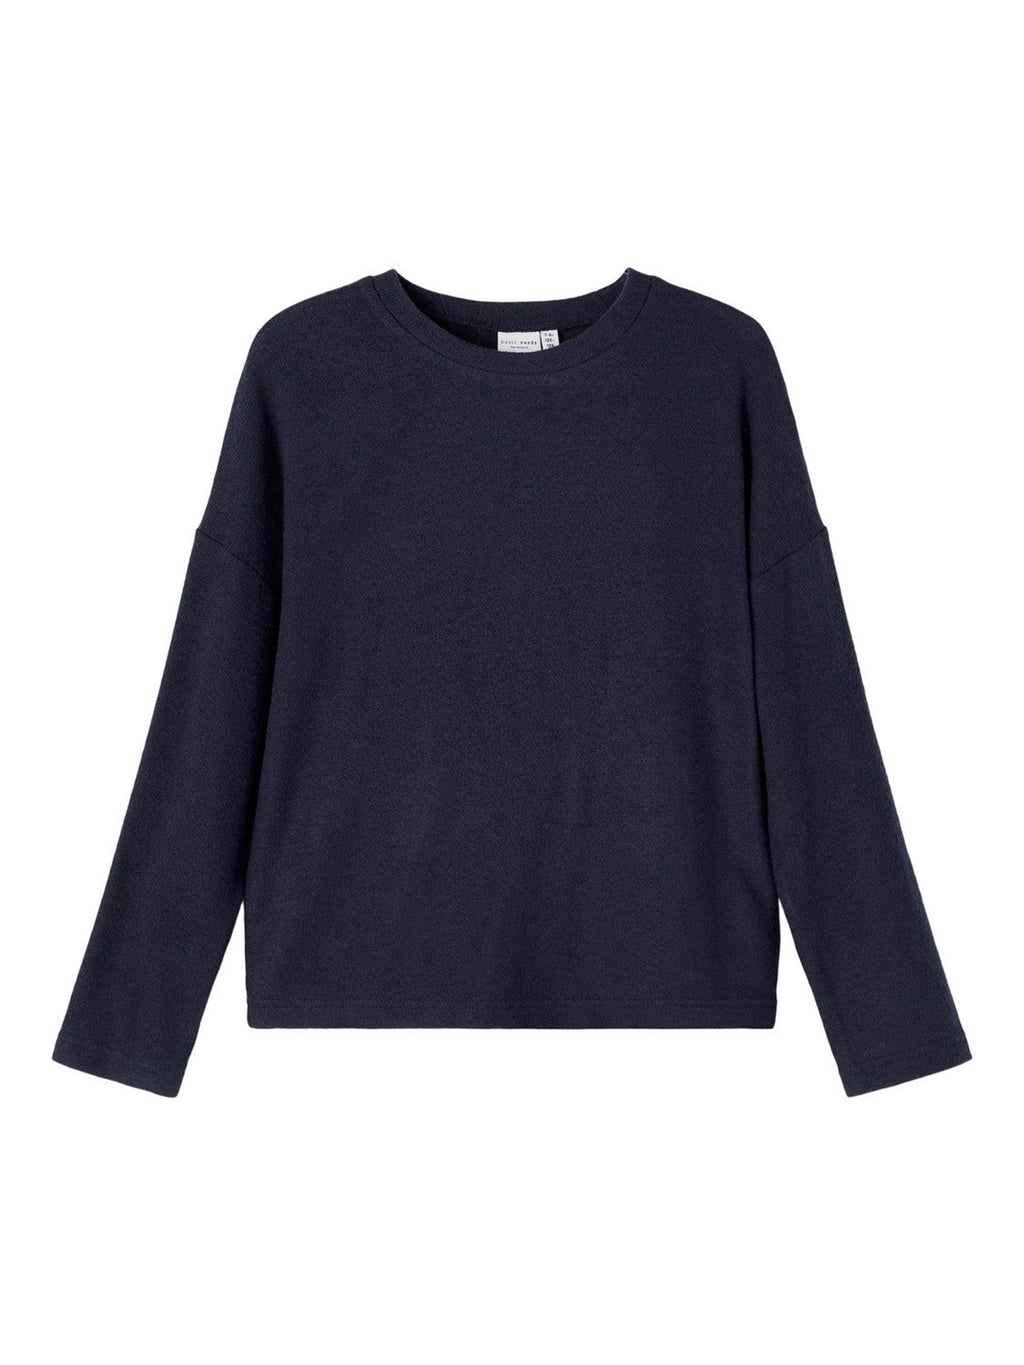 Sweaters Victi Knit - Sapphire oscuro